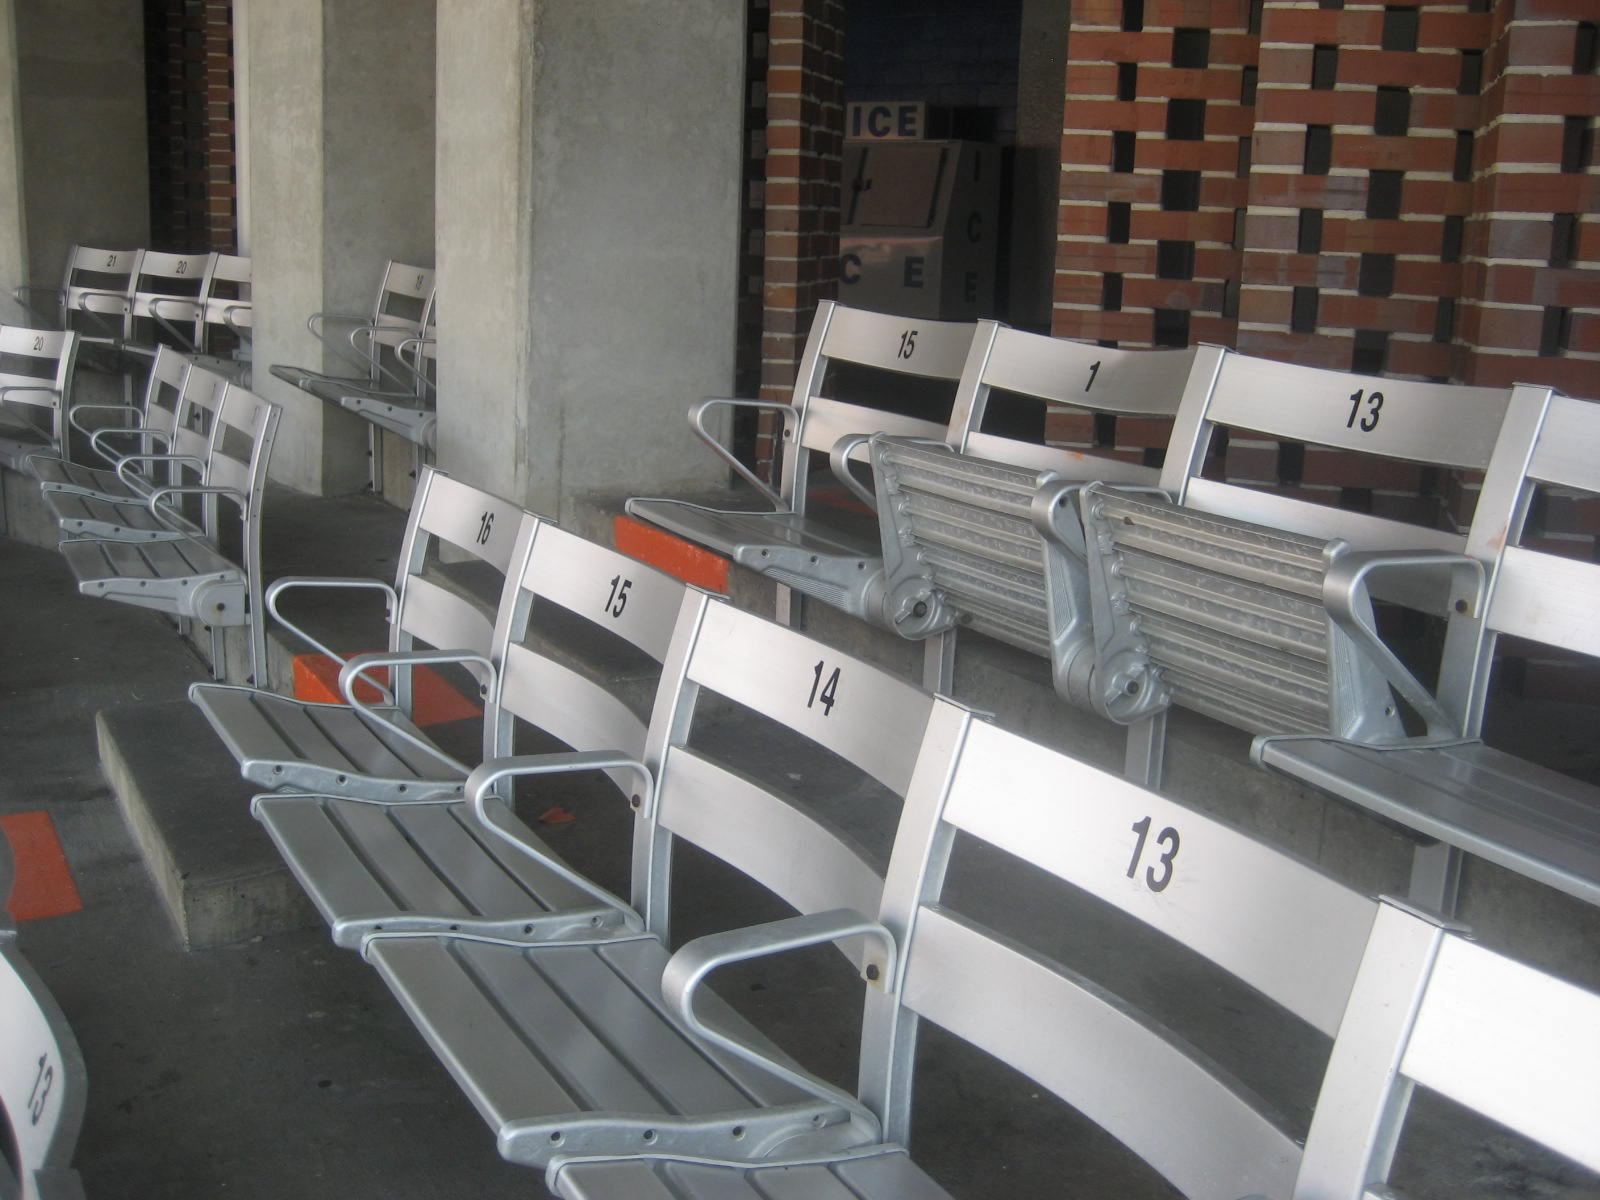 Samford University Stadium Seat Cushion